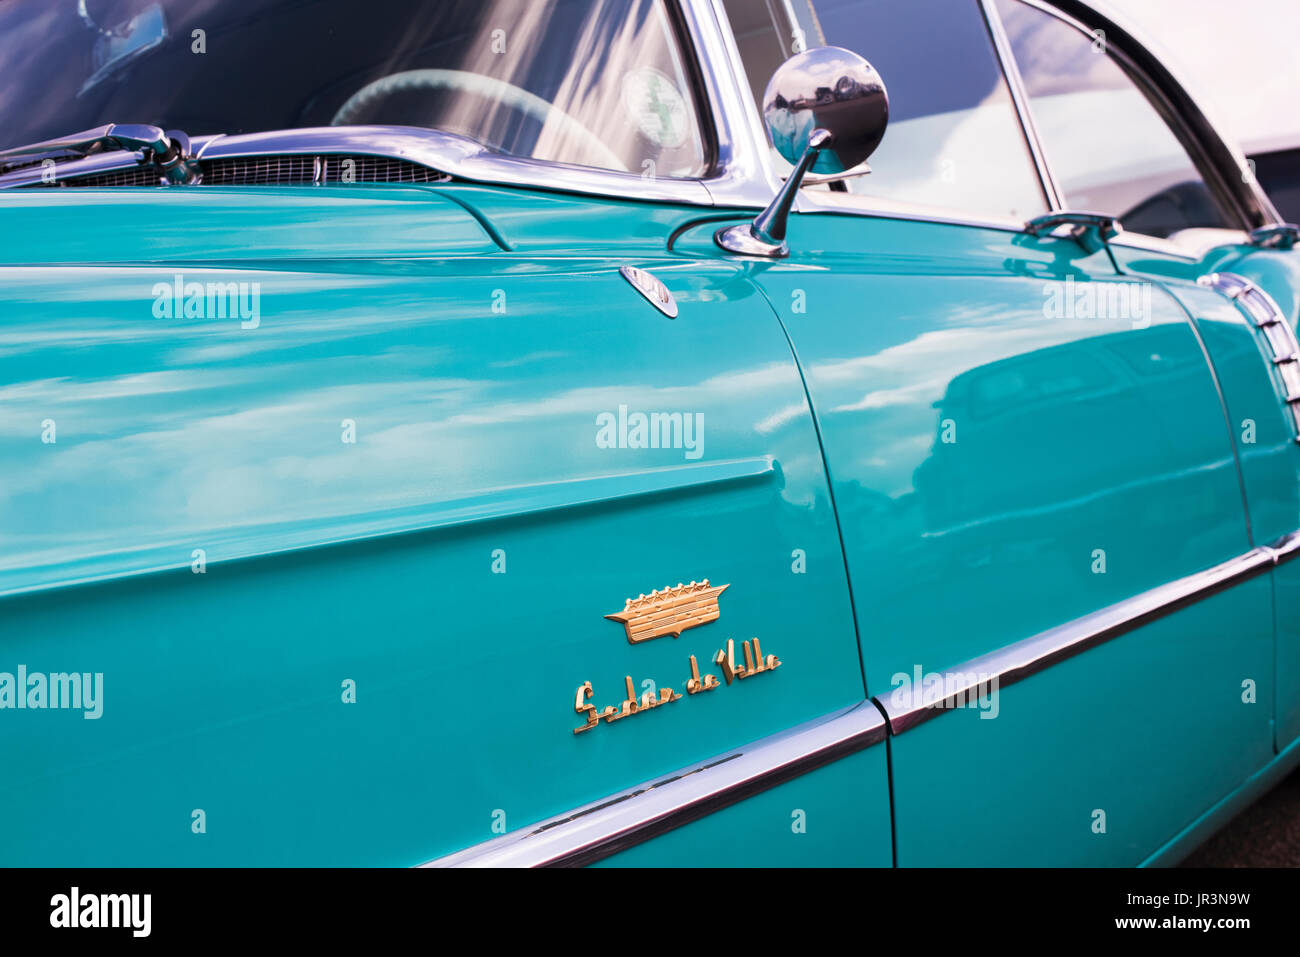 1956 Cadillac Sedan Deville side fender detail at an american car show. Essex. UK. Classic American Car Stock Photo